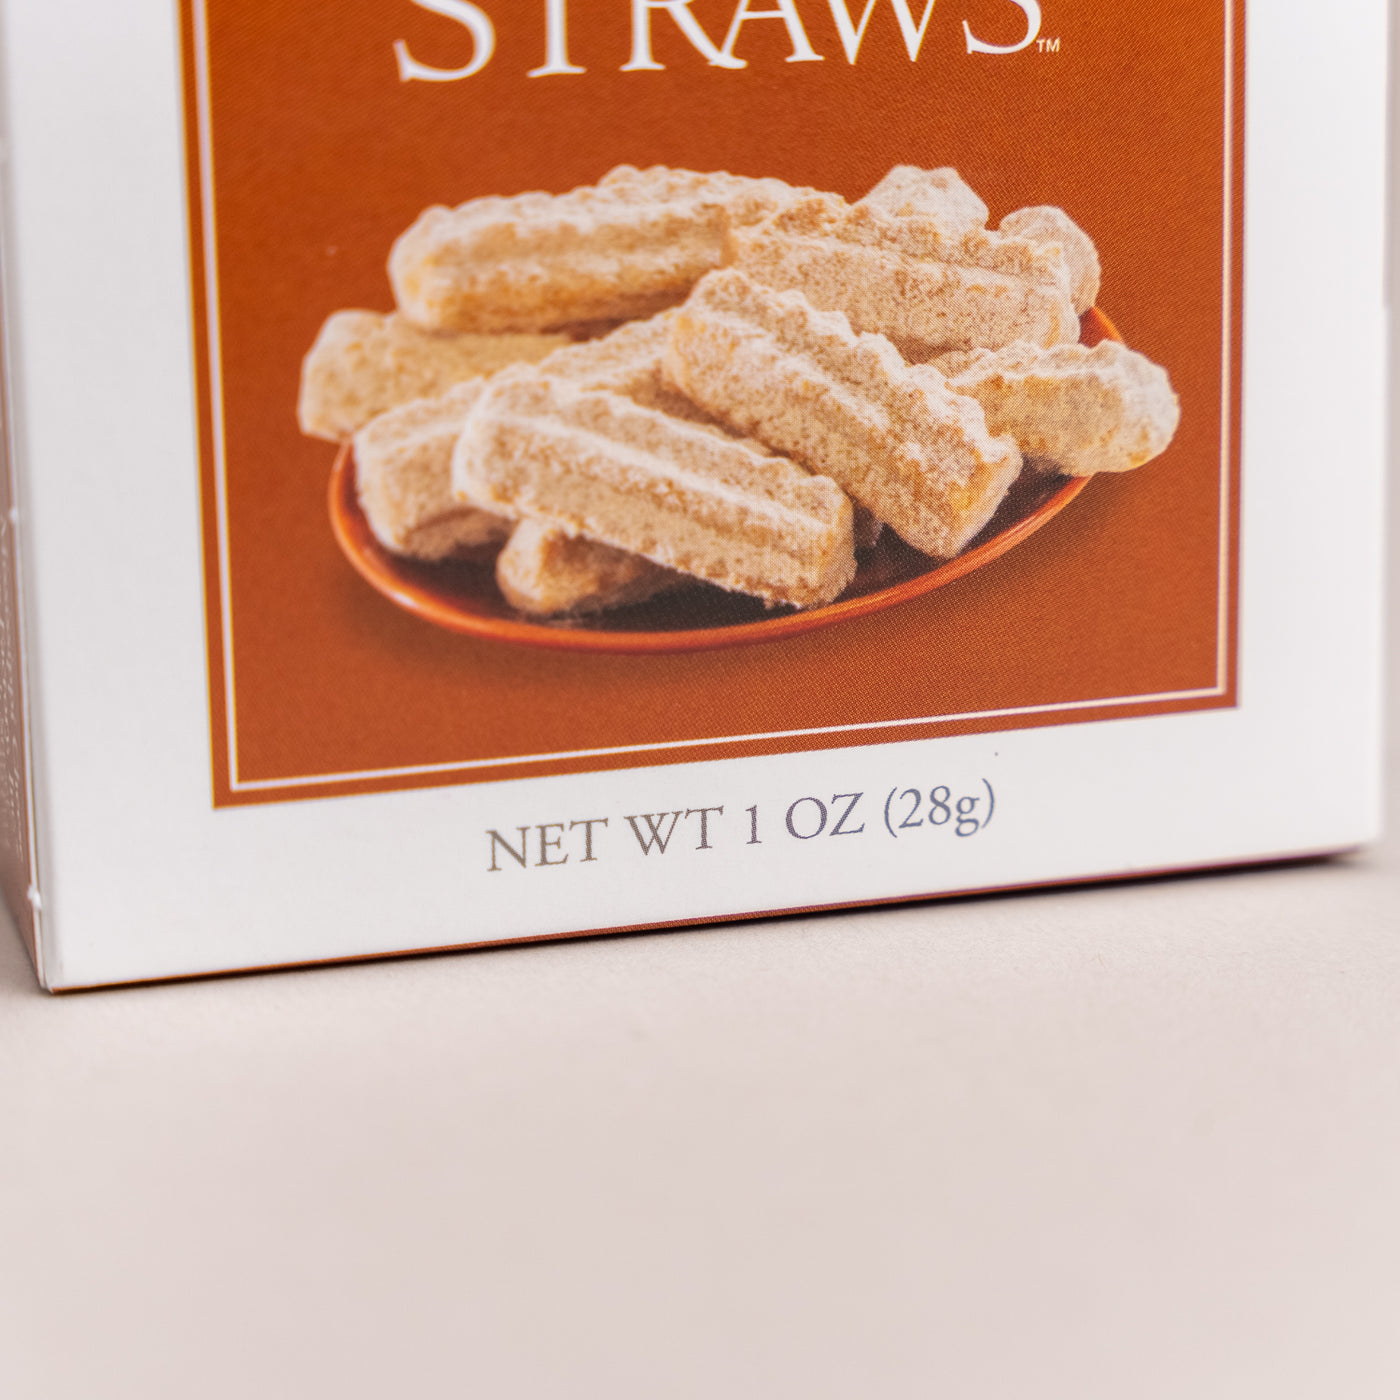 Mississippi Cheese Straw Factory Cinnamon Pecan Straws